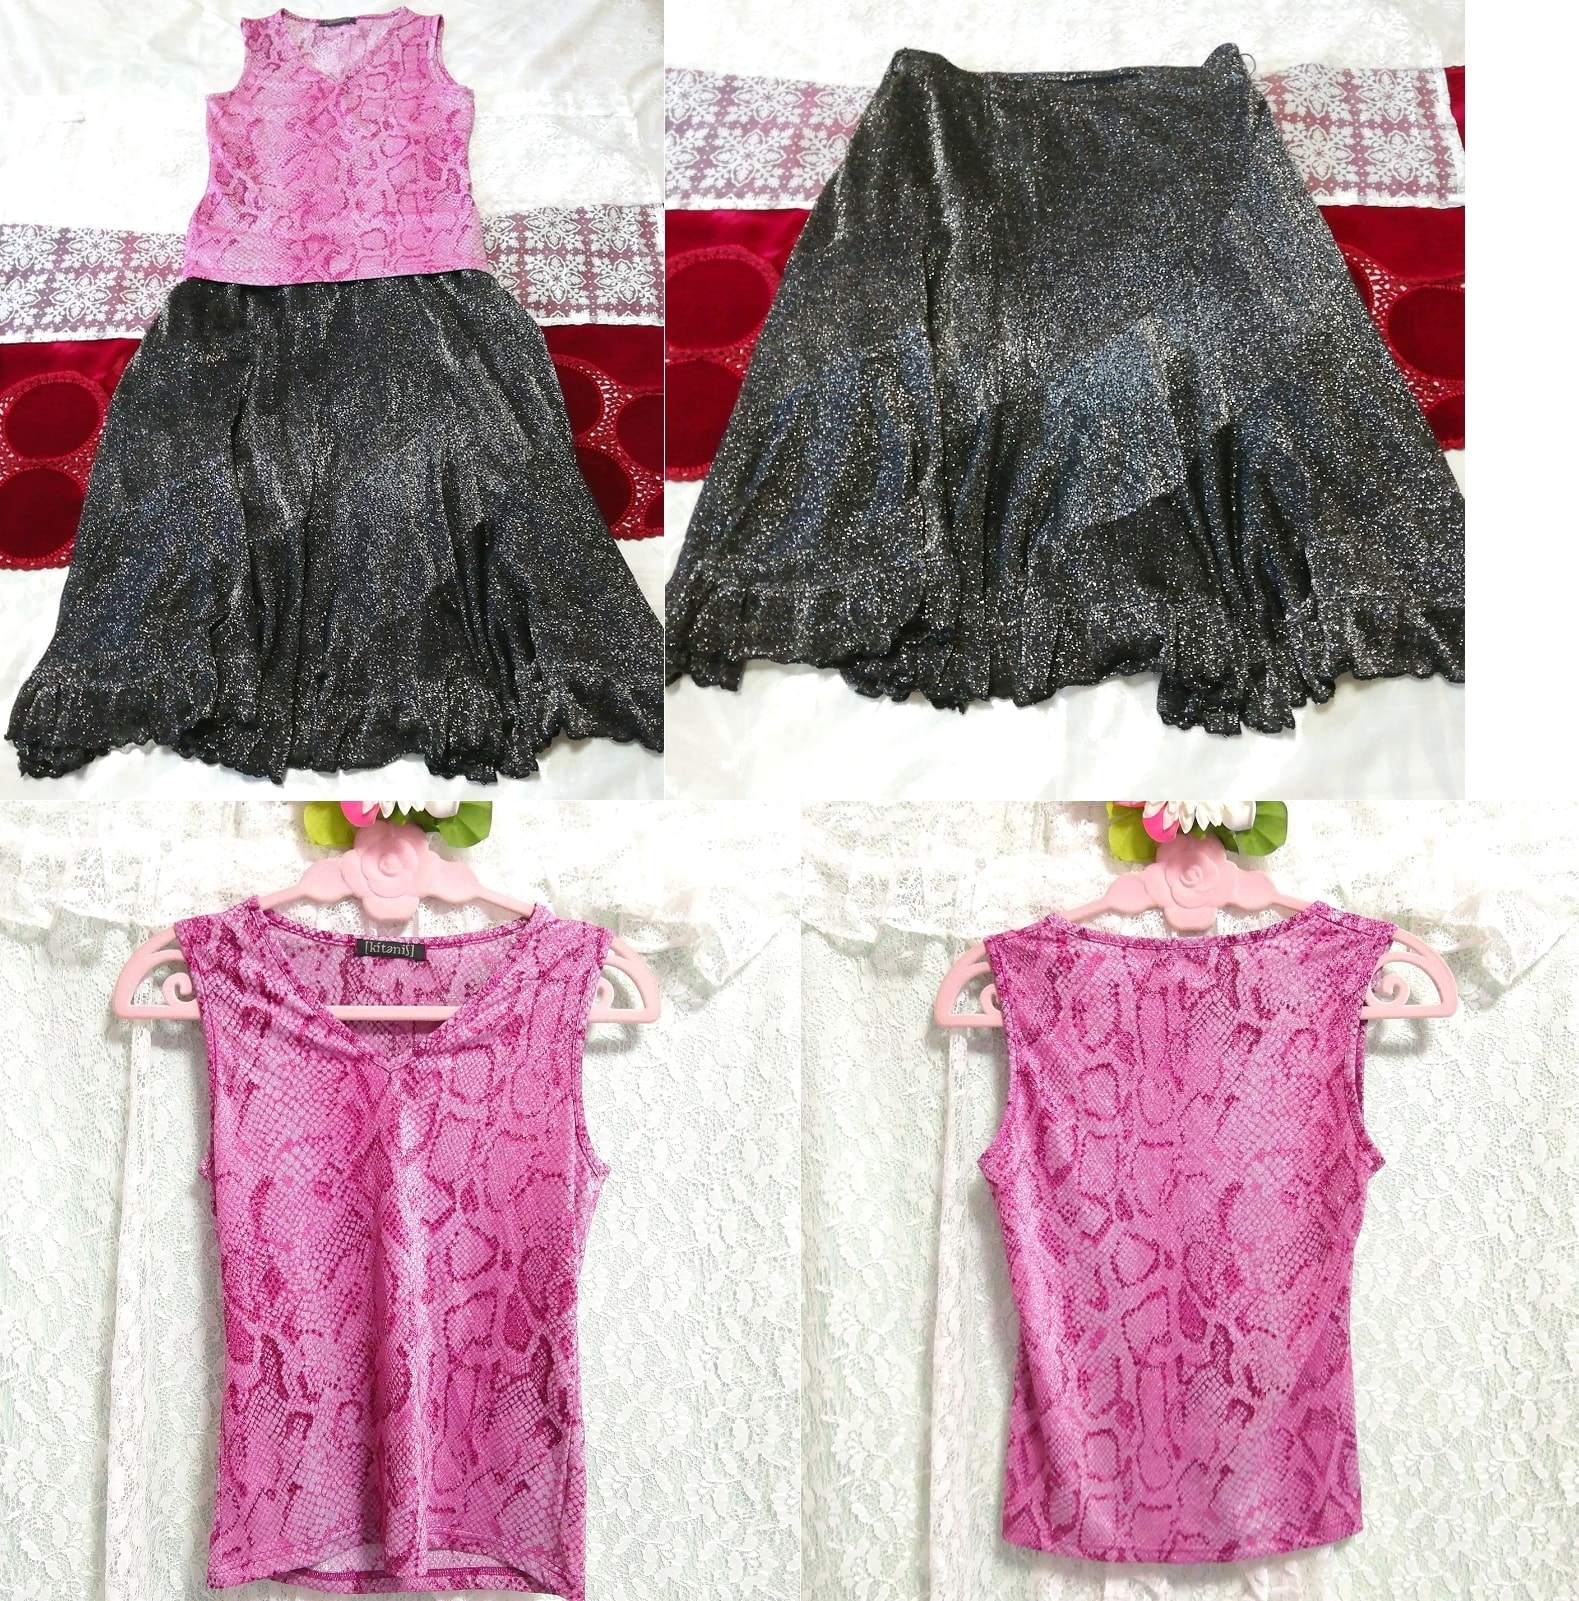 Lila-rosa Tunika-Negligé-Nachthemd, grauer Glitzer-Meerjungfrauenrock, 2 Stück, Mode, Frauenmode, Nachtwäsche, Pyjama